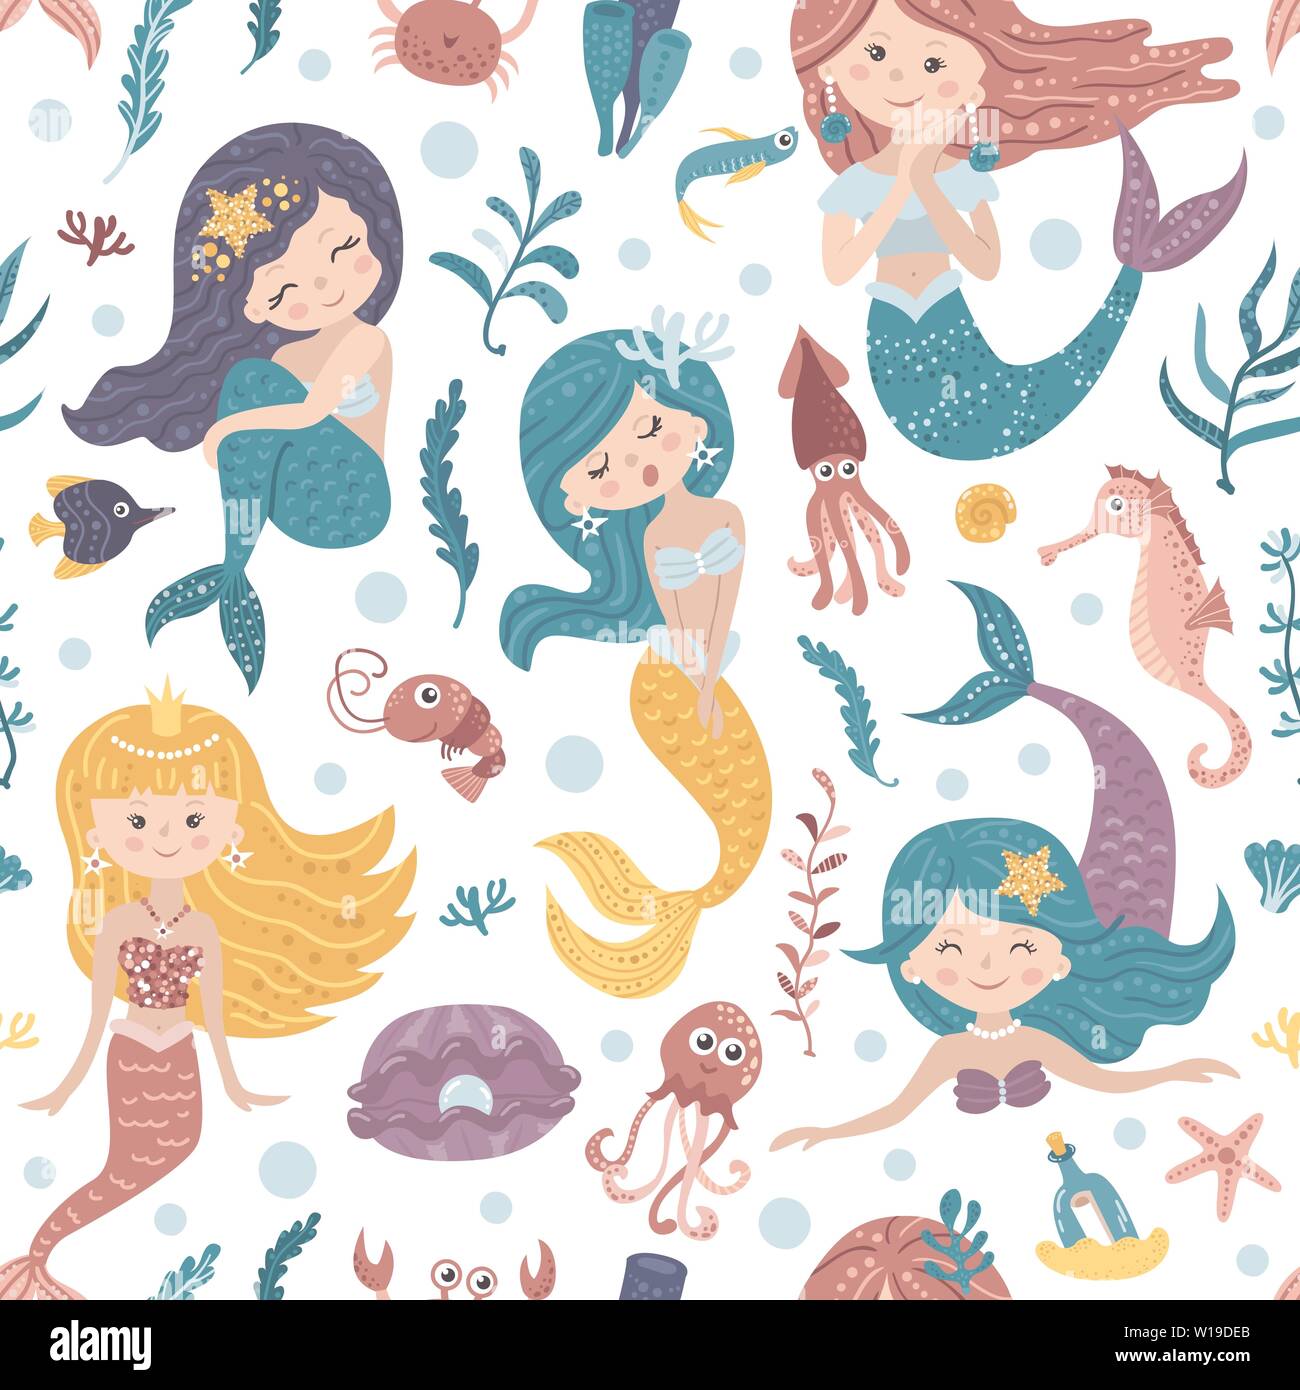 Free download kawaii mermaid wallpaper Mermaid wallpaper backgrounds Mermaid  [1242x2208] for your Desktop, Mobile & Tablet | Explore 31+ Mermaid  Backgrounds | Mermaid Wallpapers, Free Mermaid Wallpaper, Mermaid Wallpaper